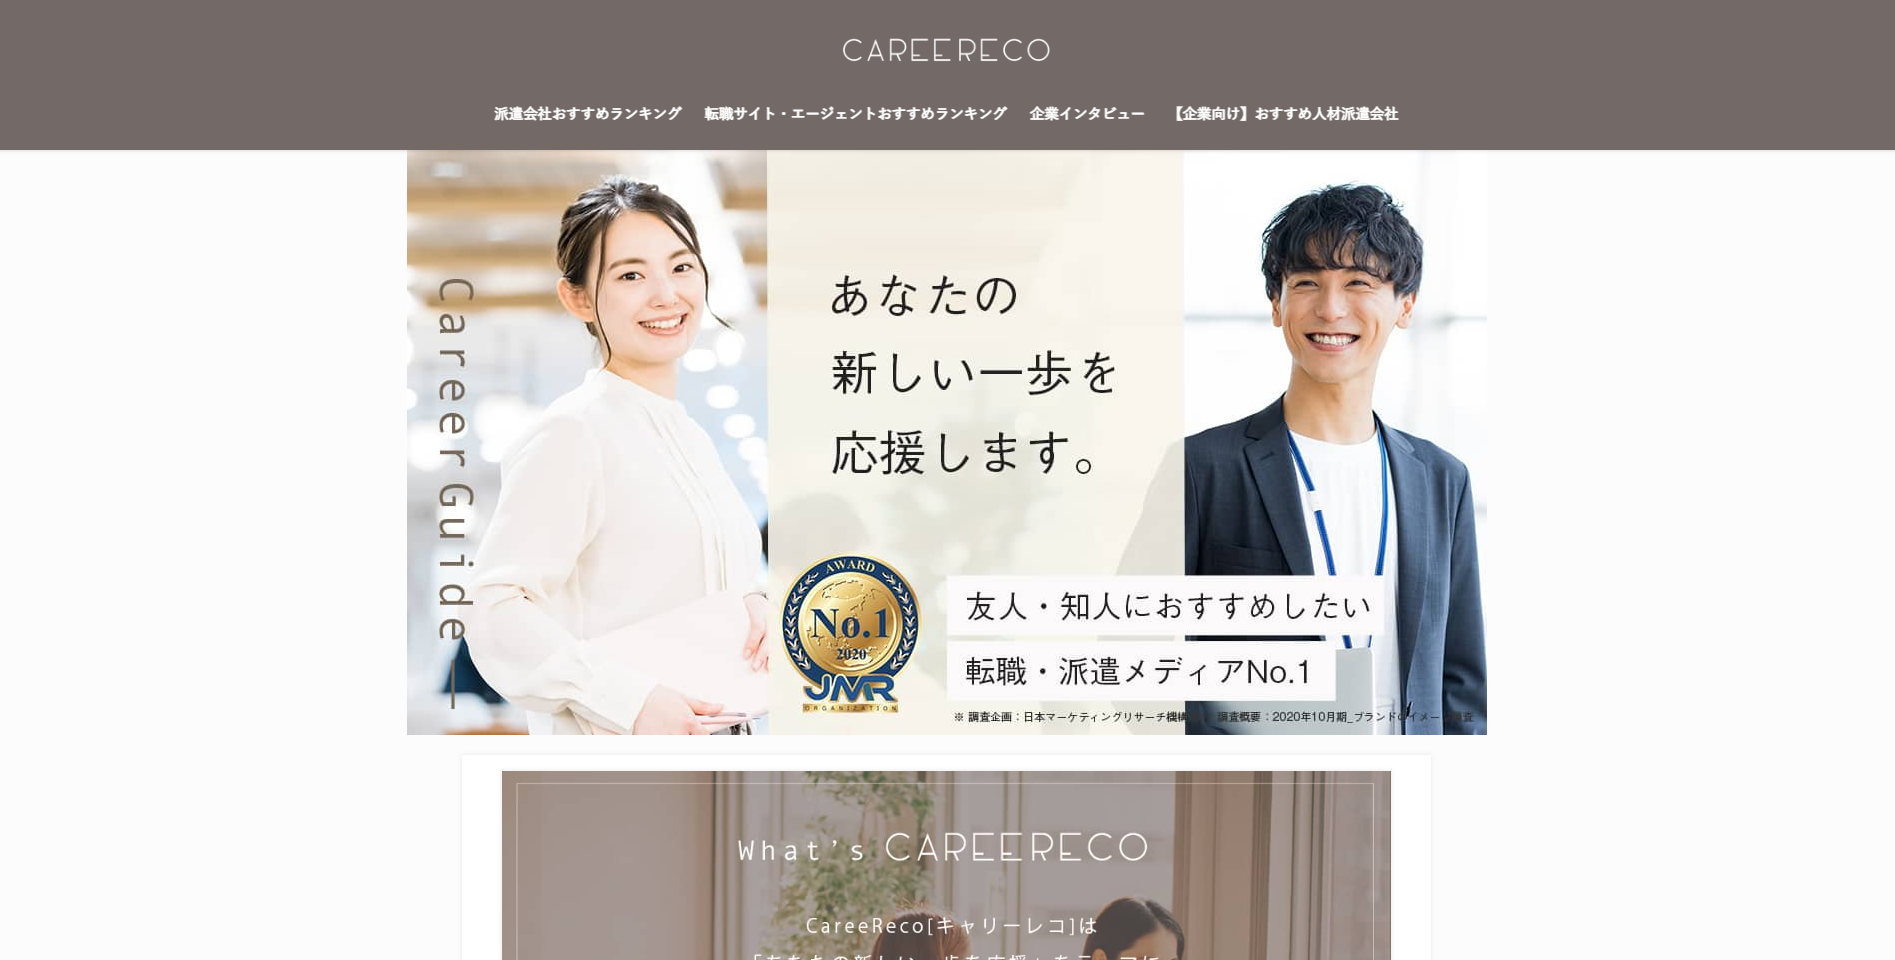 careerecoさんに静岡県のおすすめ派遣会社として掲載頂きました！